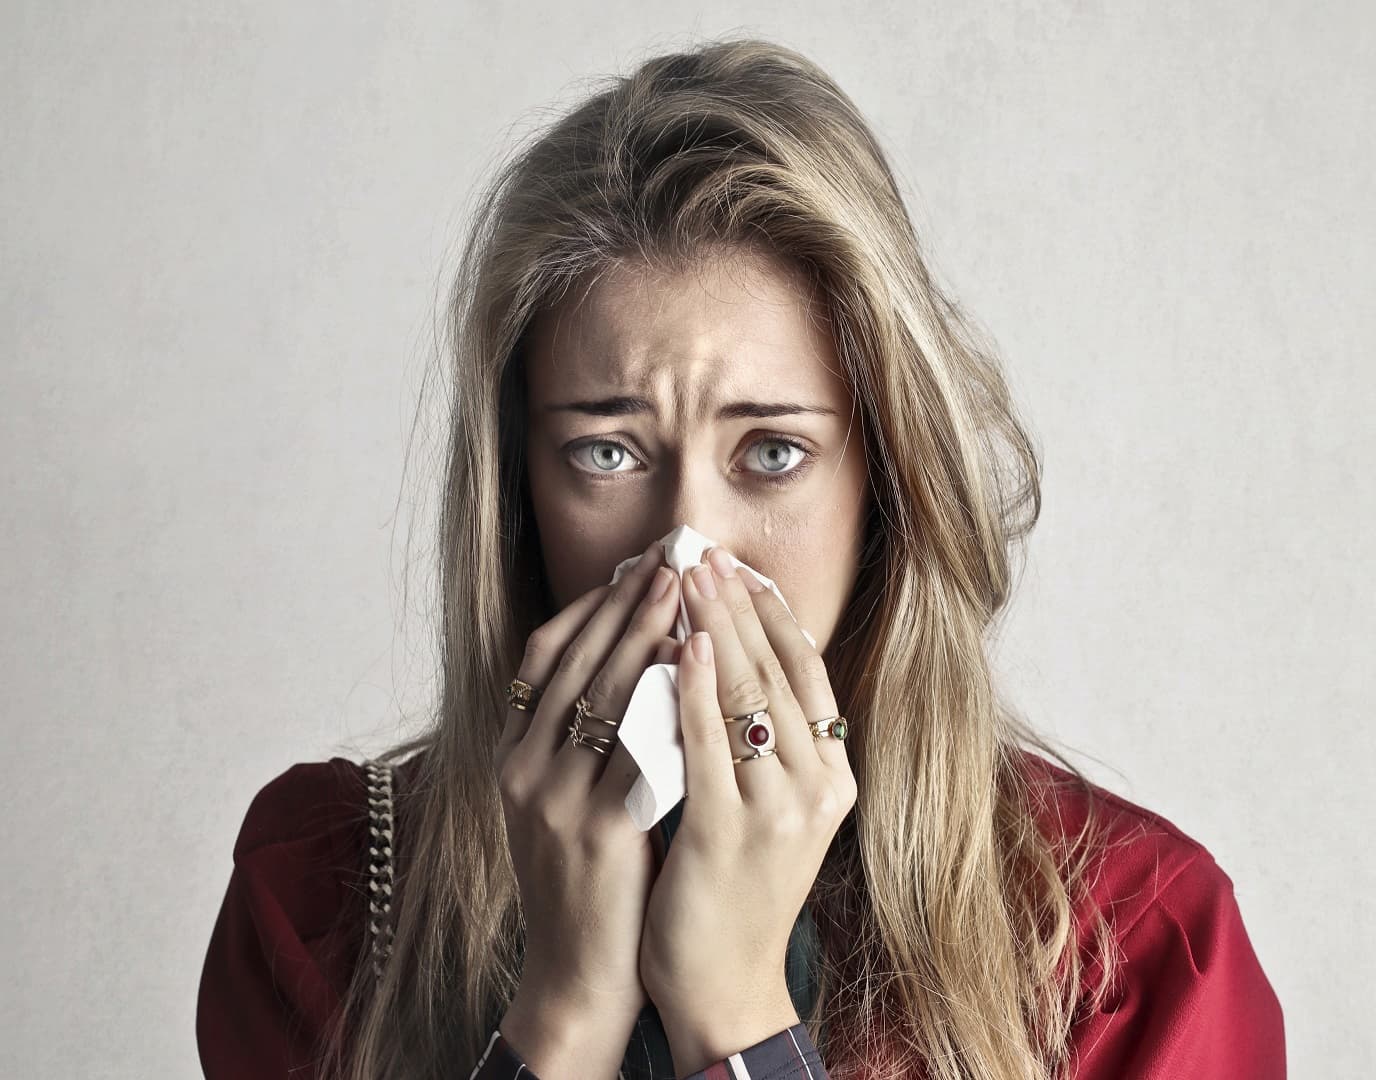 Symptoms of hay fever